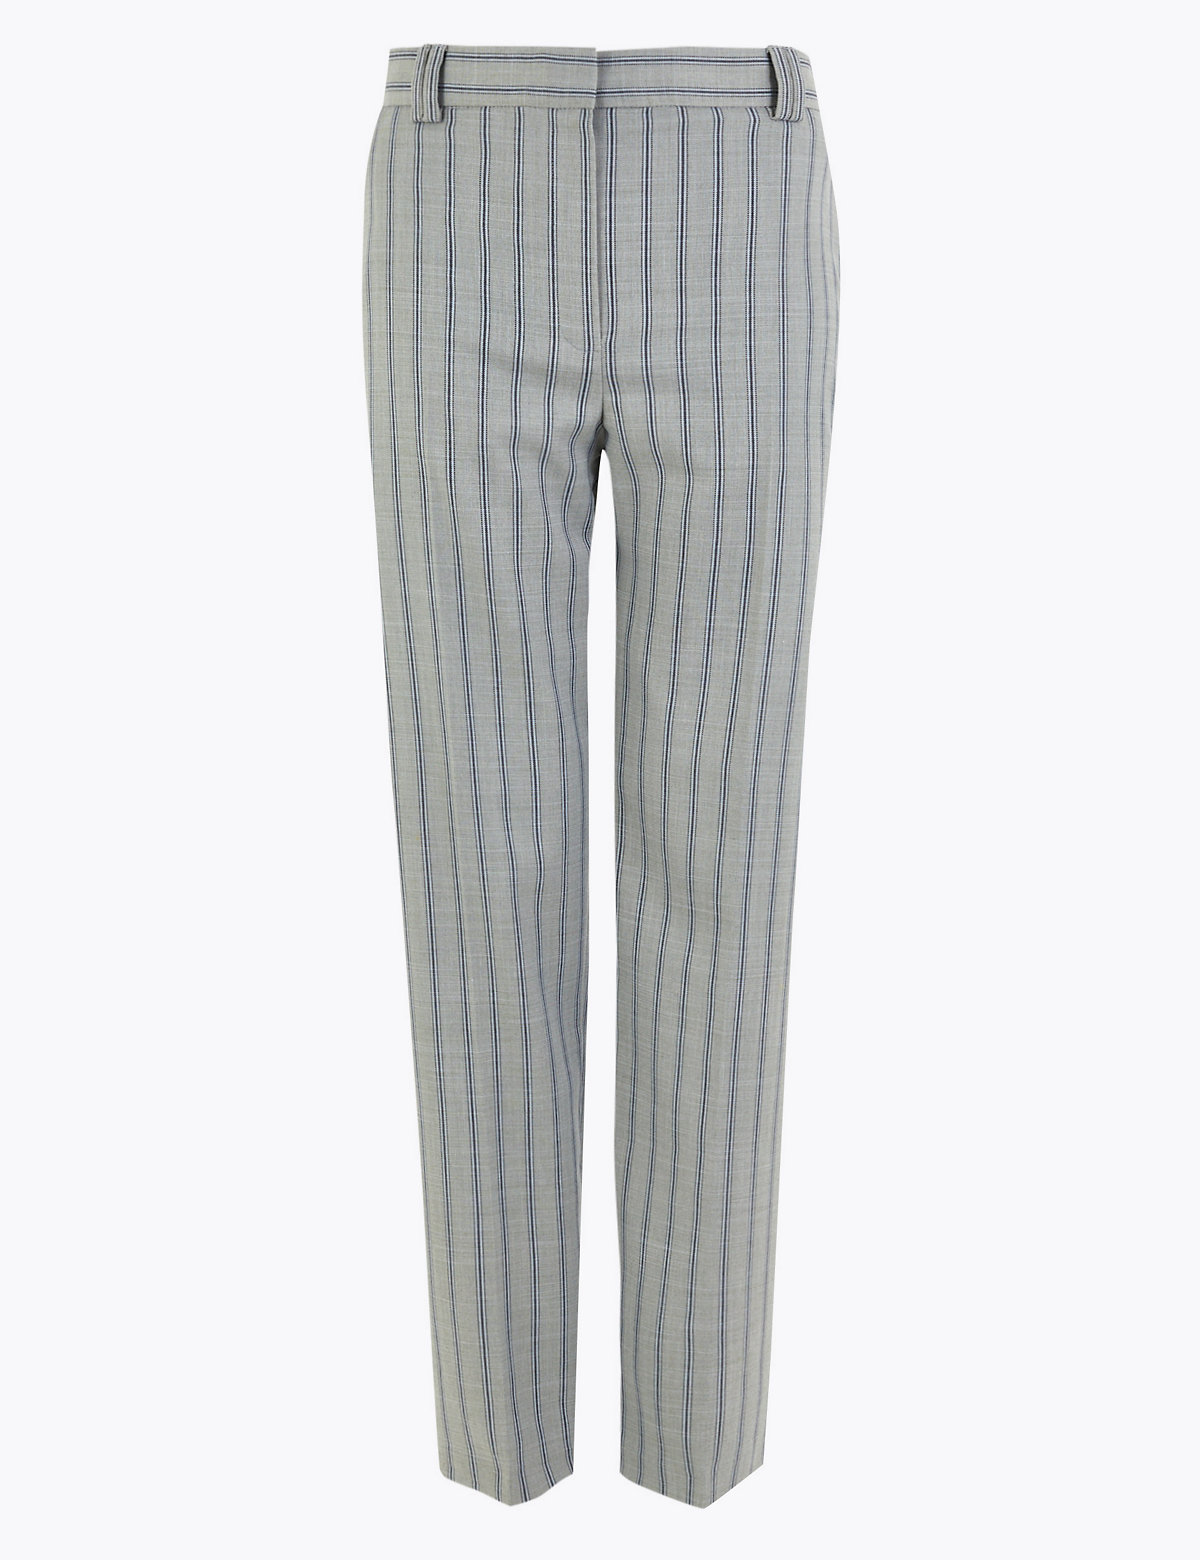 Freya Straight Striped Trousers